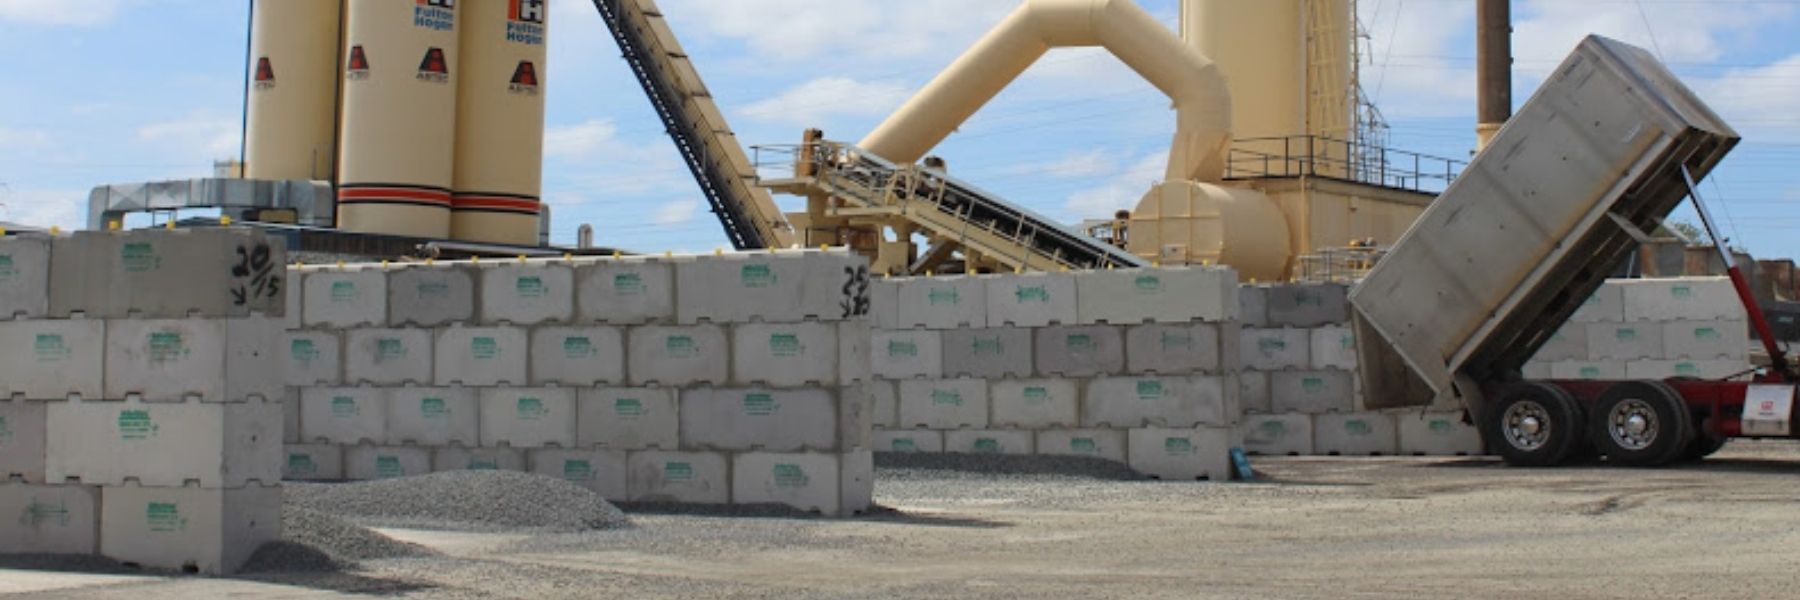 Interbloc concrete blocks forming bins for Fulton Hogan's aggregate